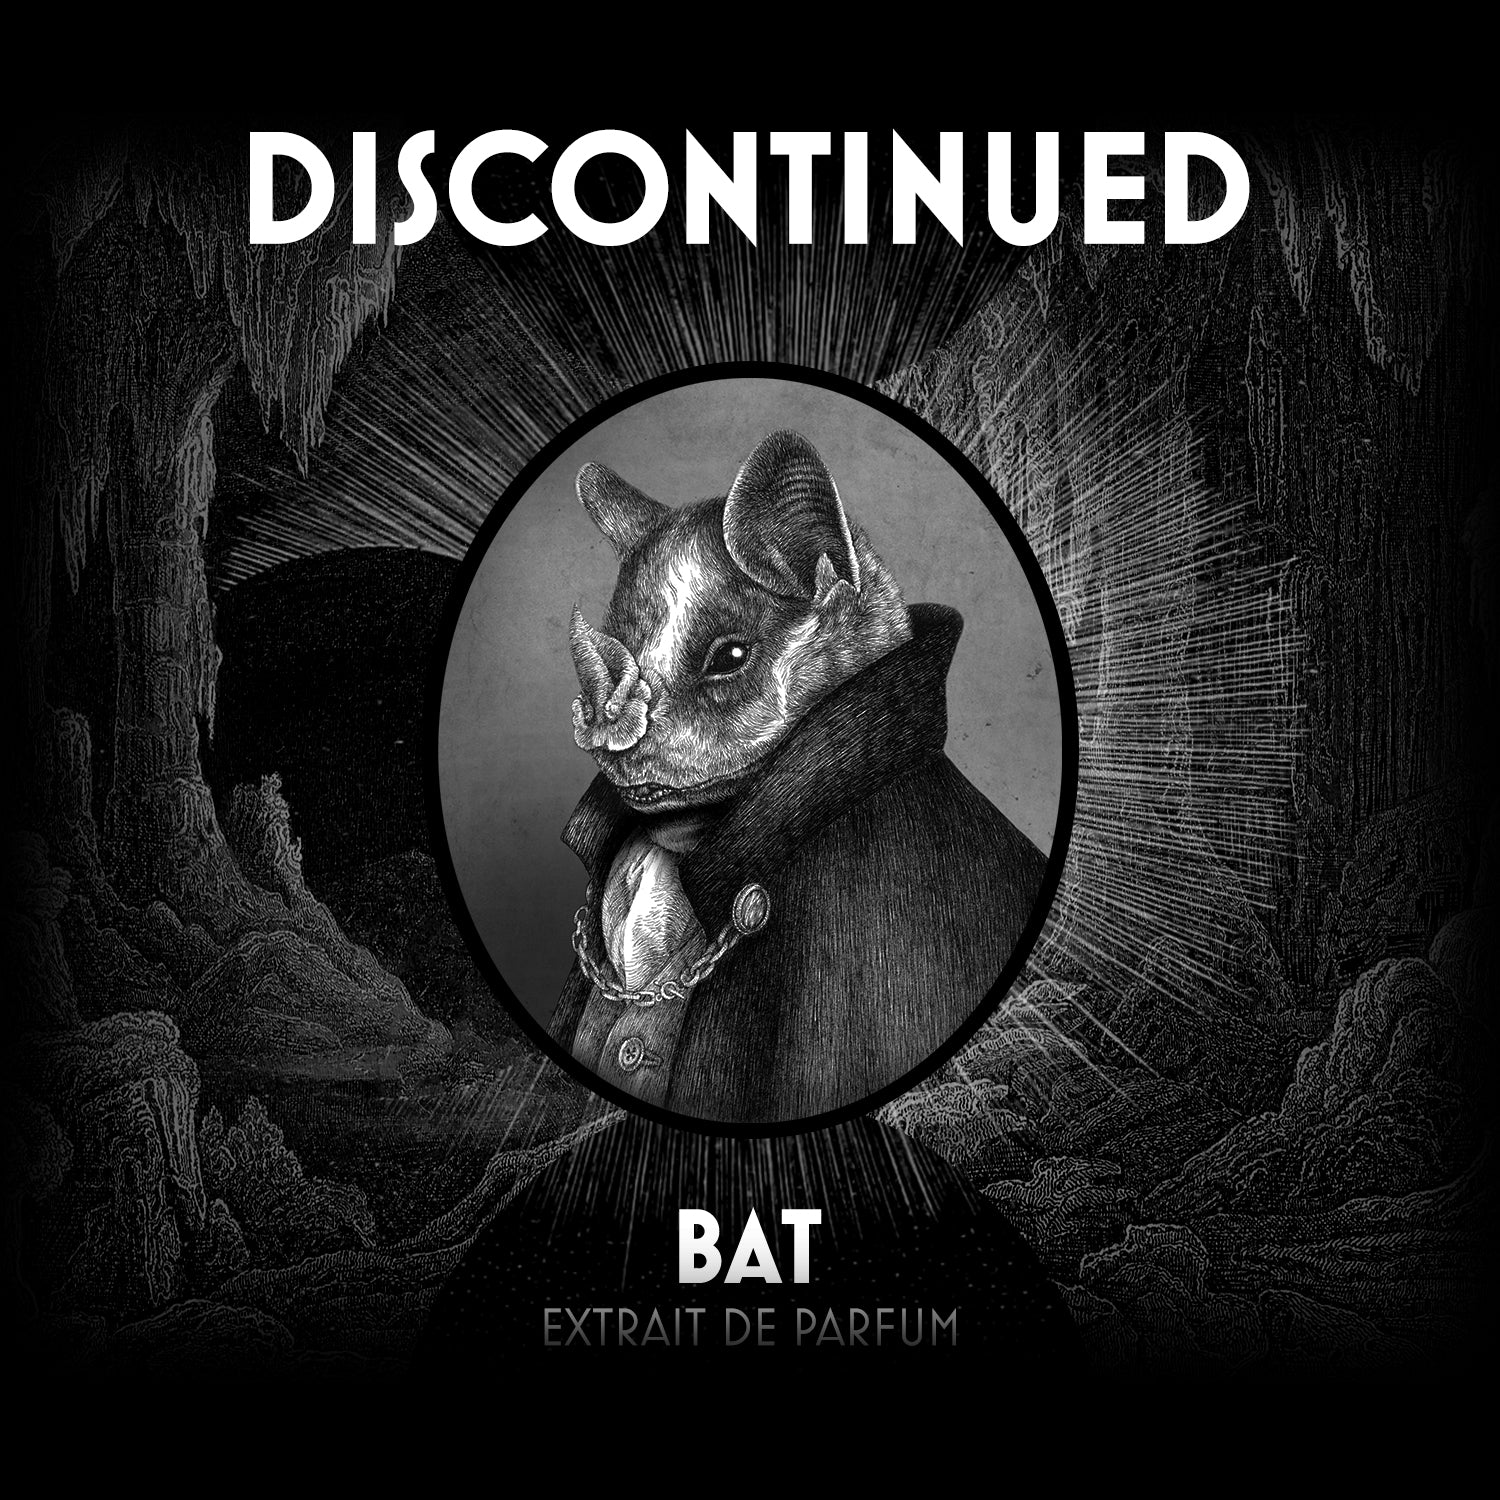 Zoologist Bat Discontinued